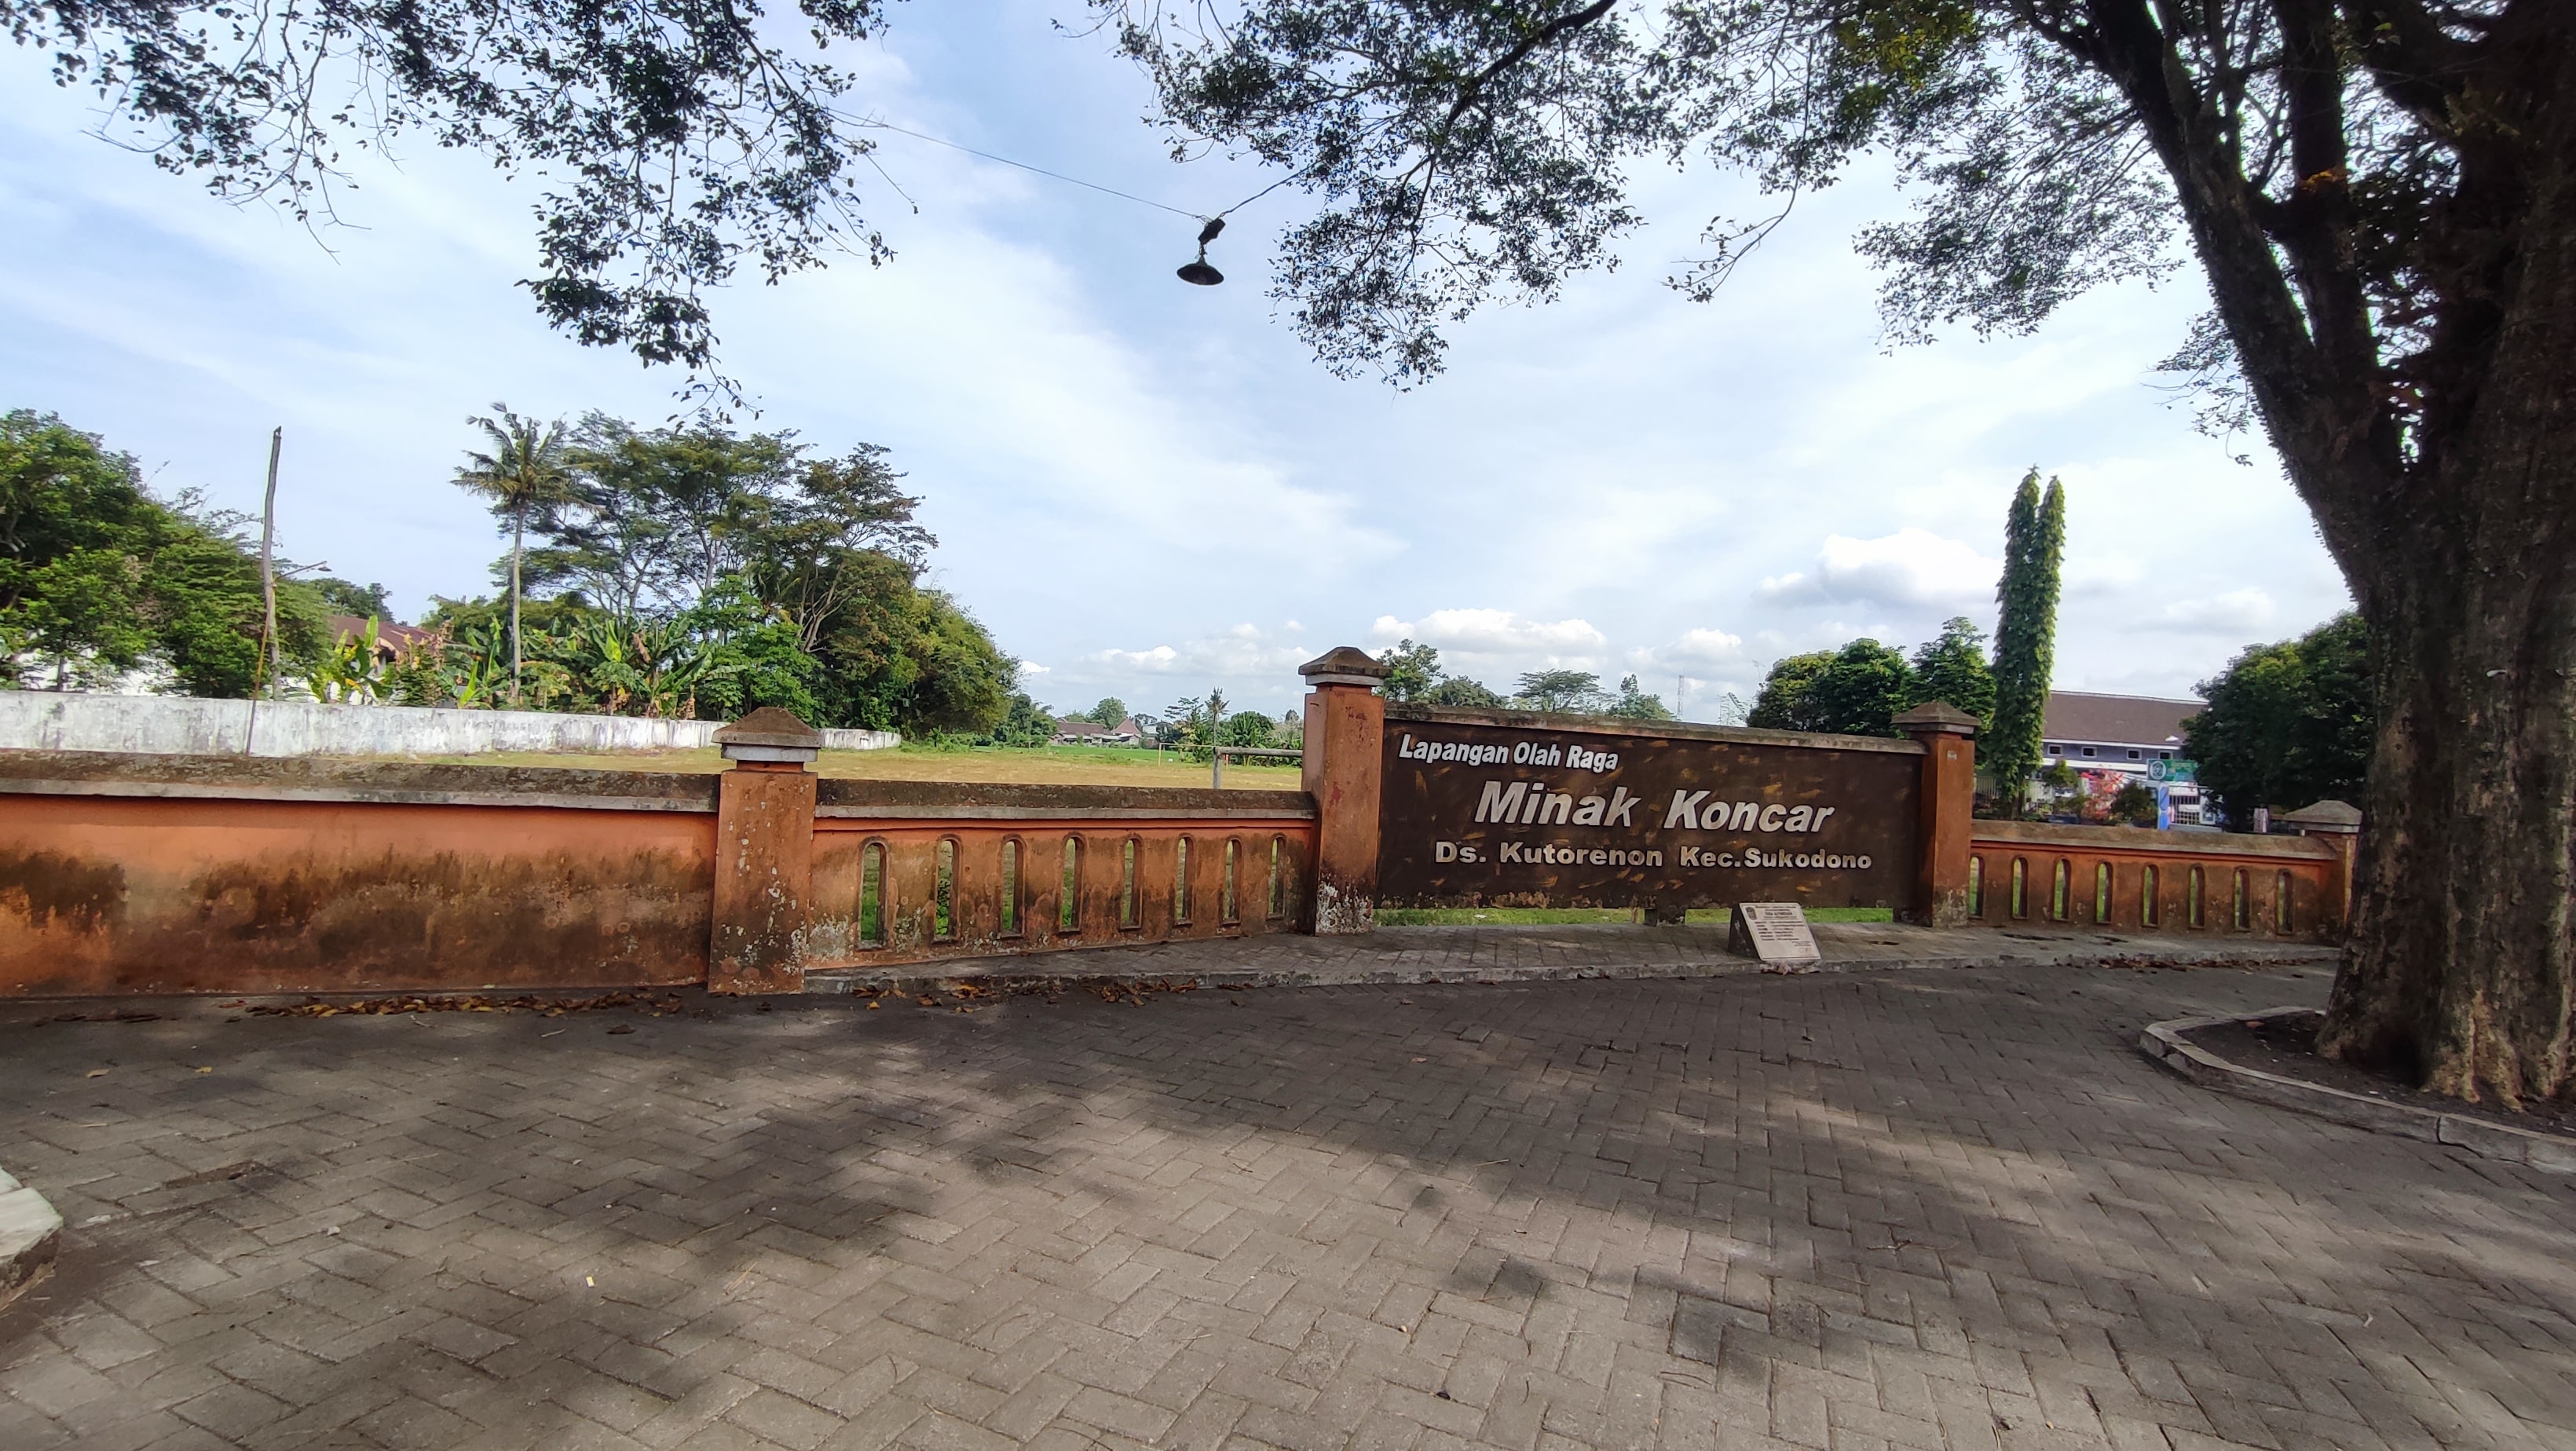 Lapangan Minak Koncar